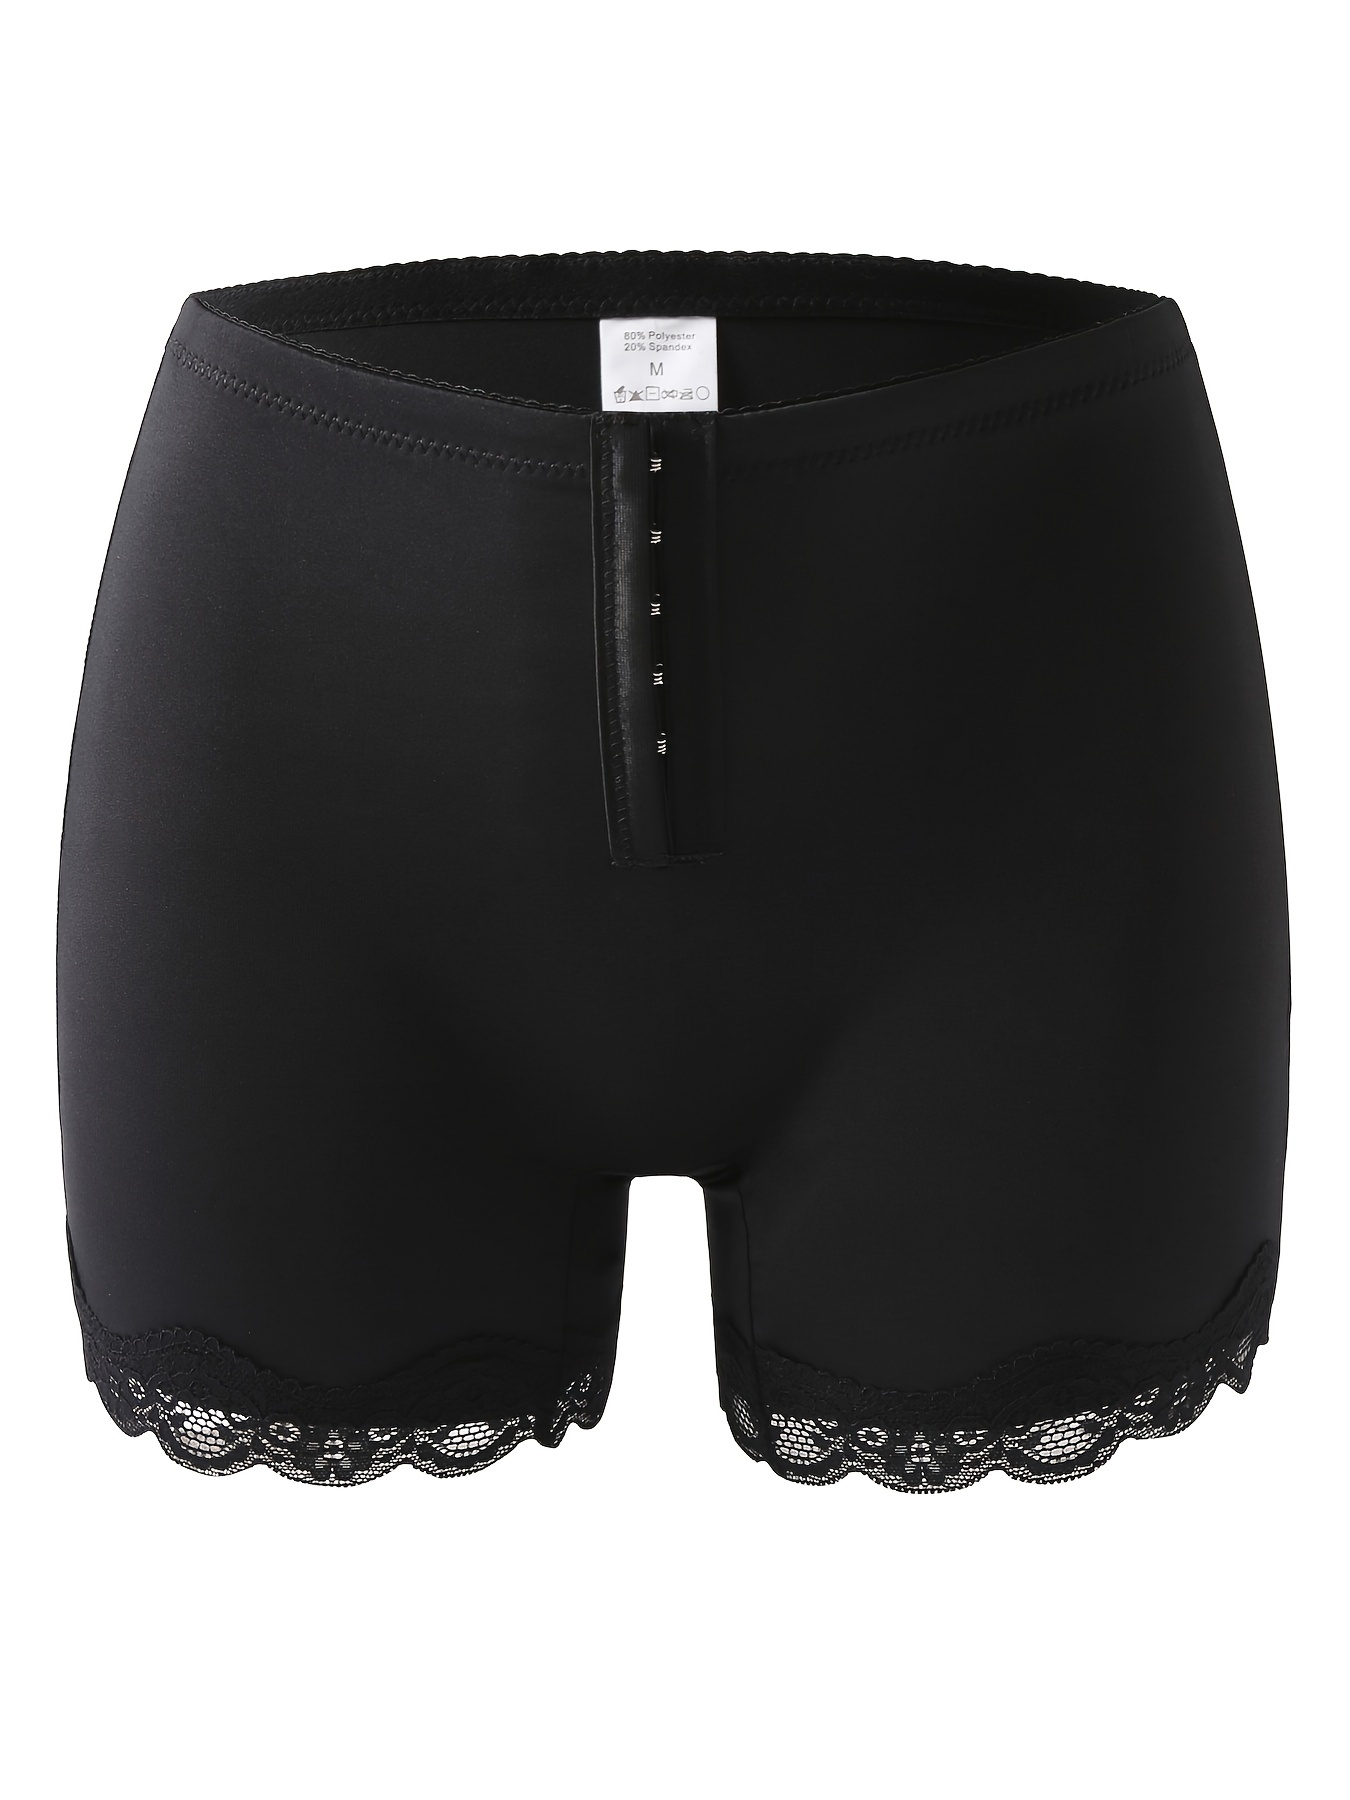 Boy Shorts Spandex Velssut Women Butt Lifter Panties at Rs 250